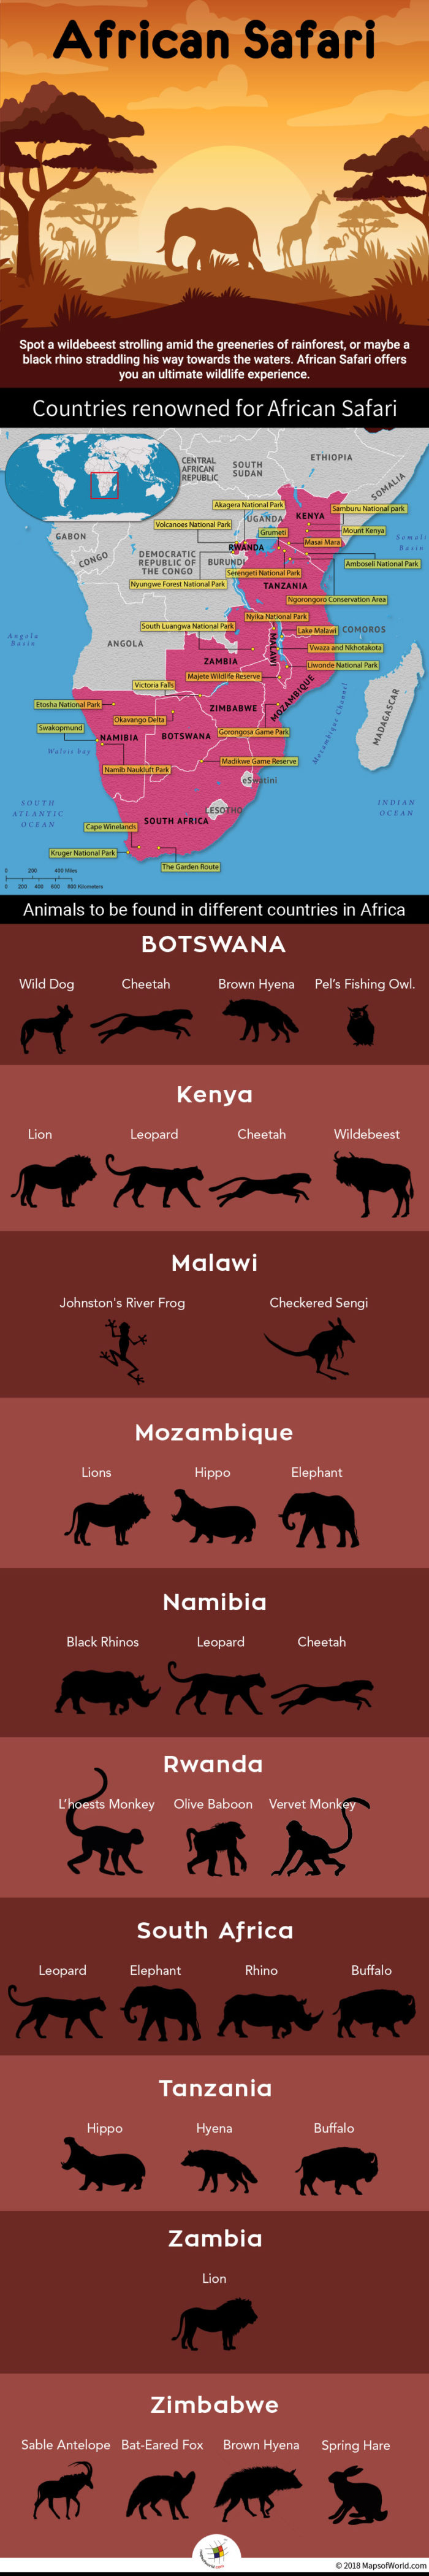 Infographic elaborating African Safari Destinations